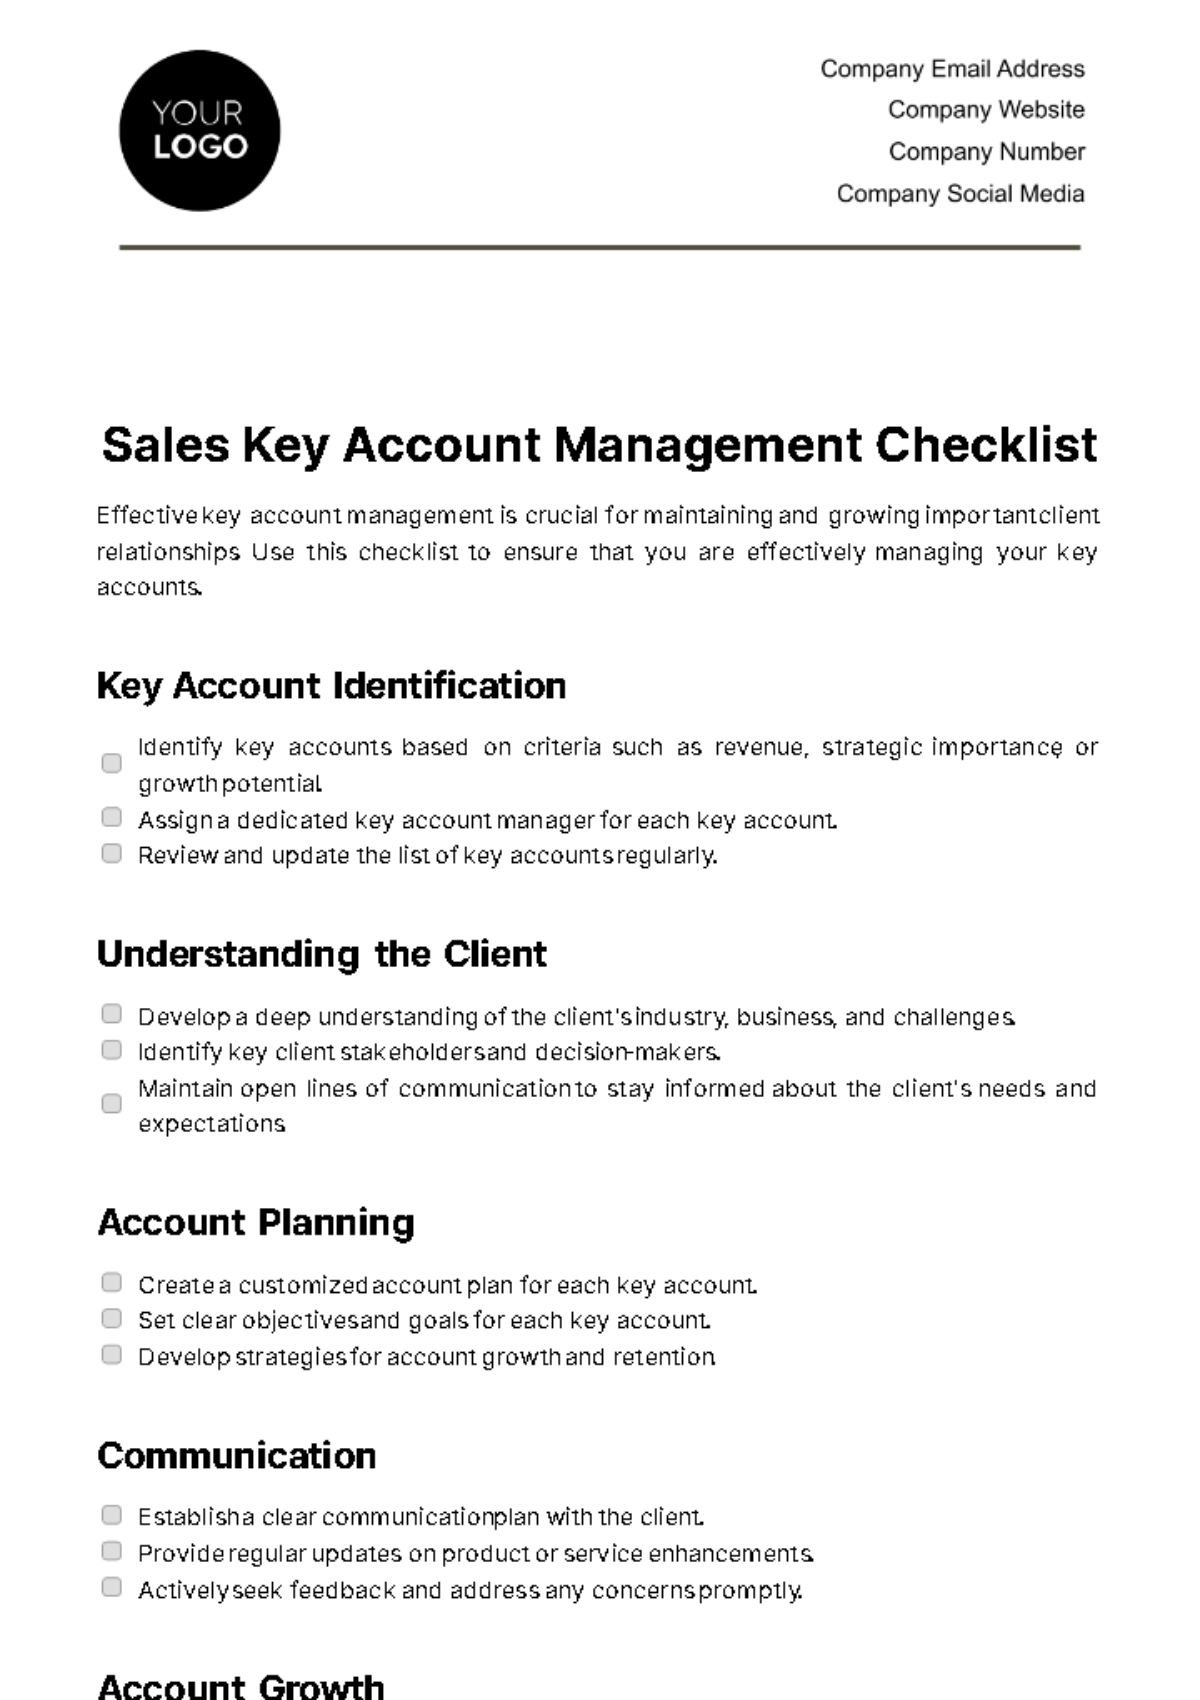 Sales Key Account Management Checklist Template